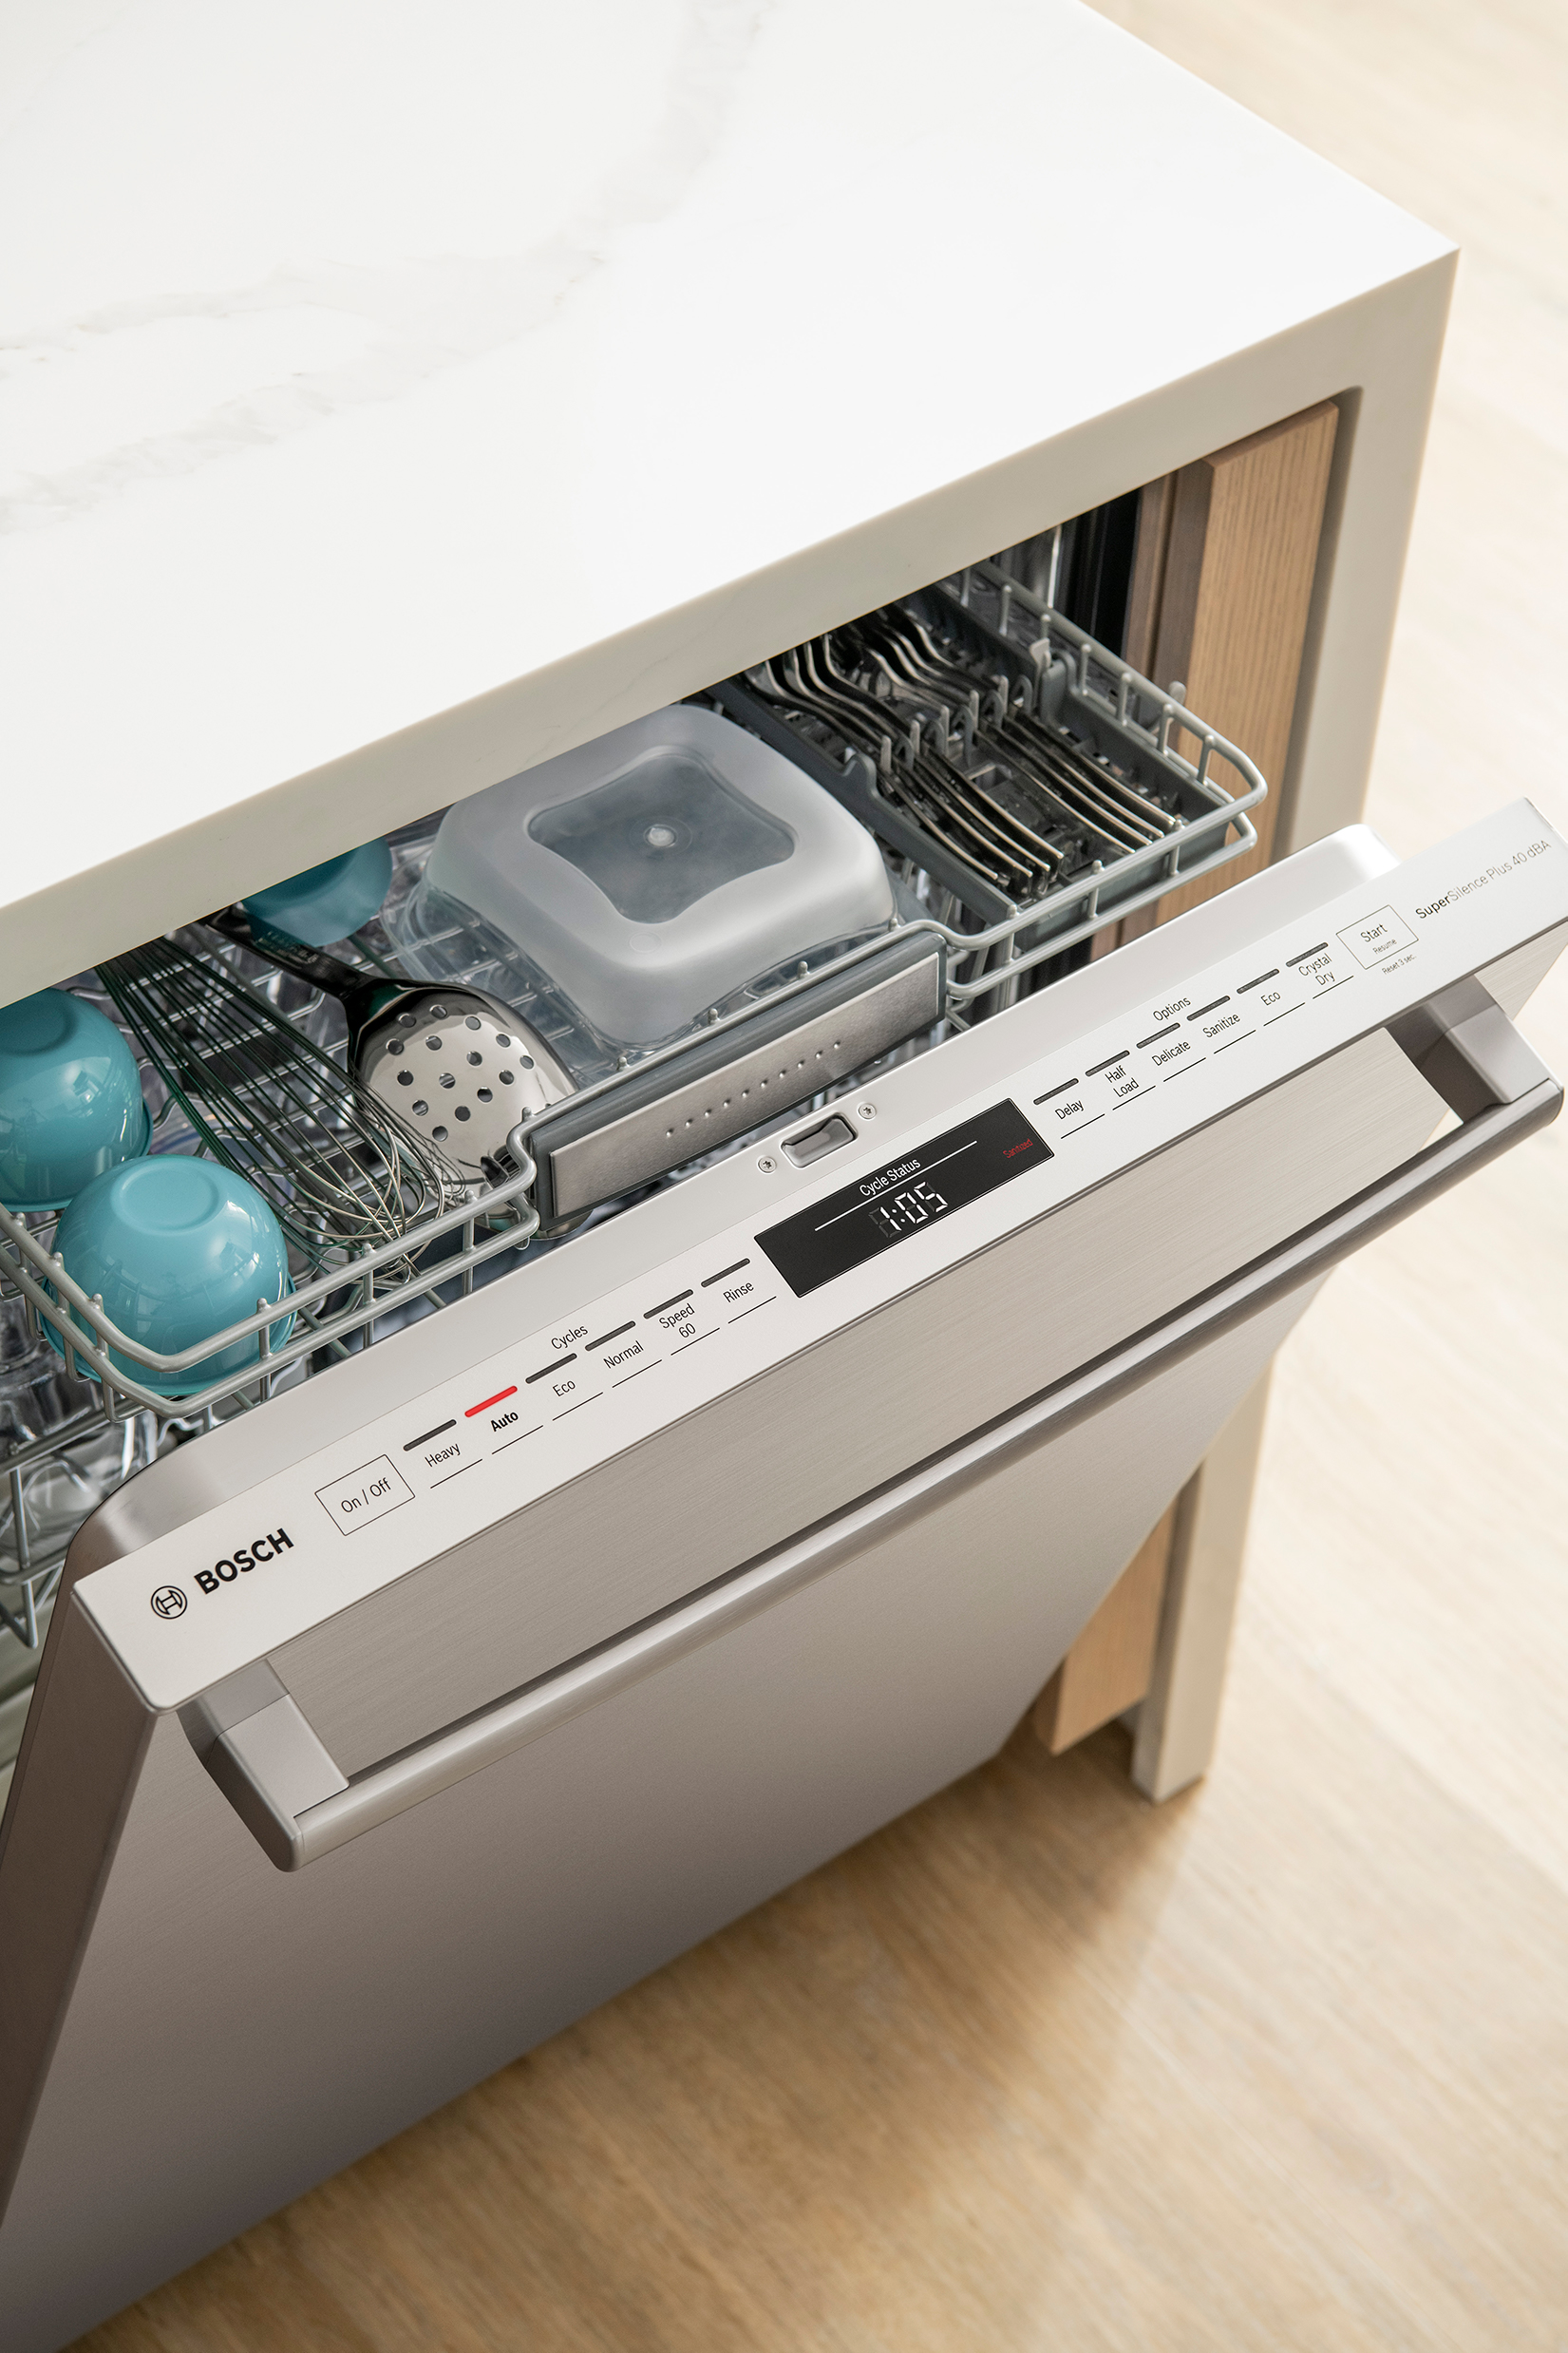 The new Bosch 800 Series dishwasher